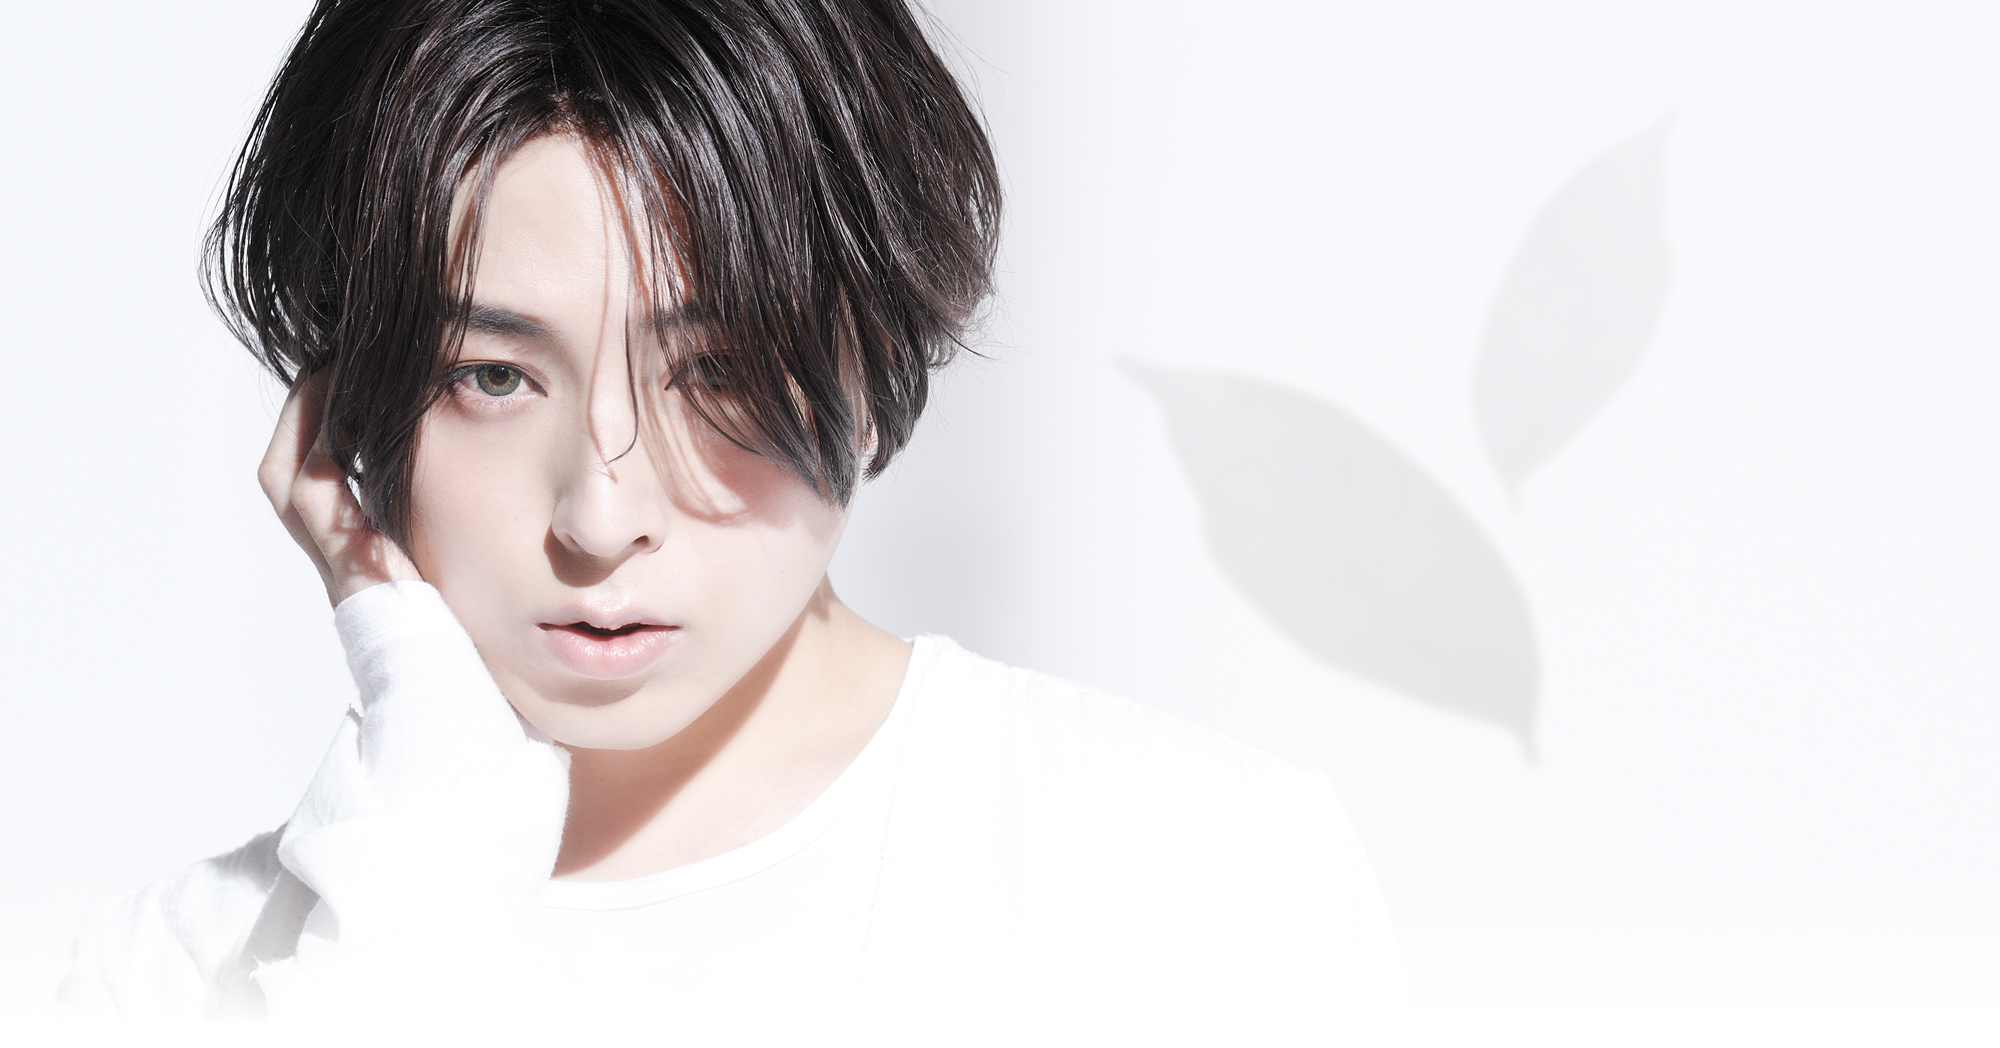 Stream ToruKisu  Listen to [Aoi Shouta 蒼井翔太] - Kimi to Boku OST (2012)  playlist online for free on SoundCloud